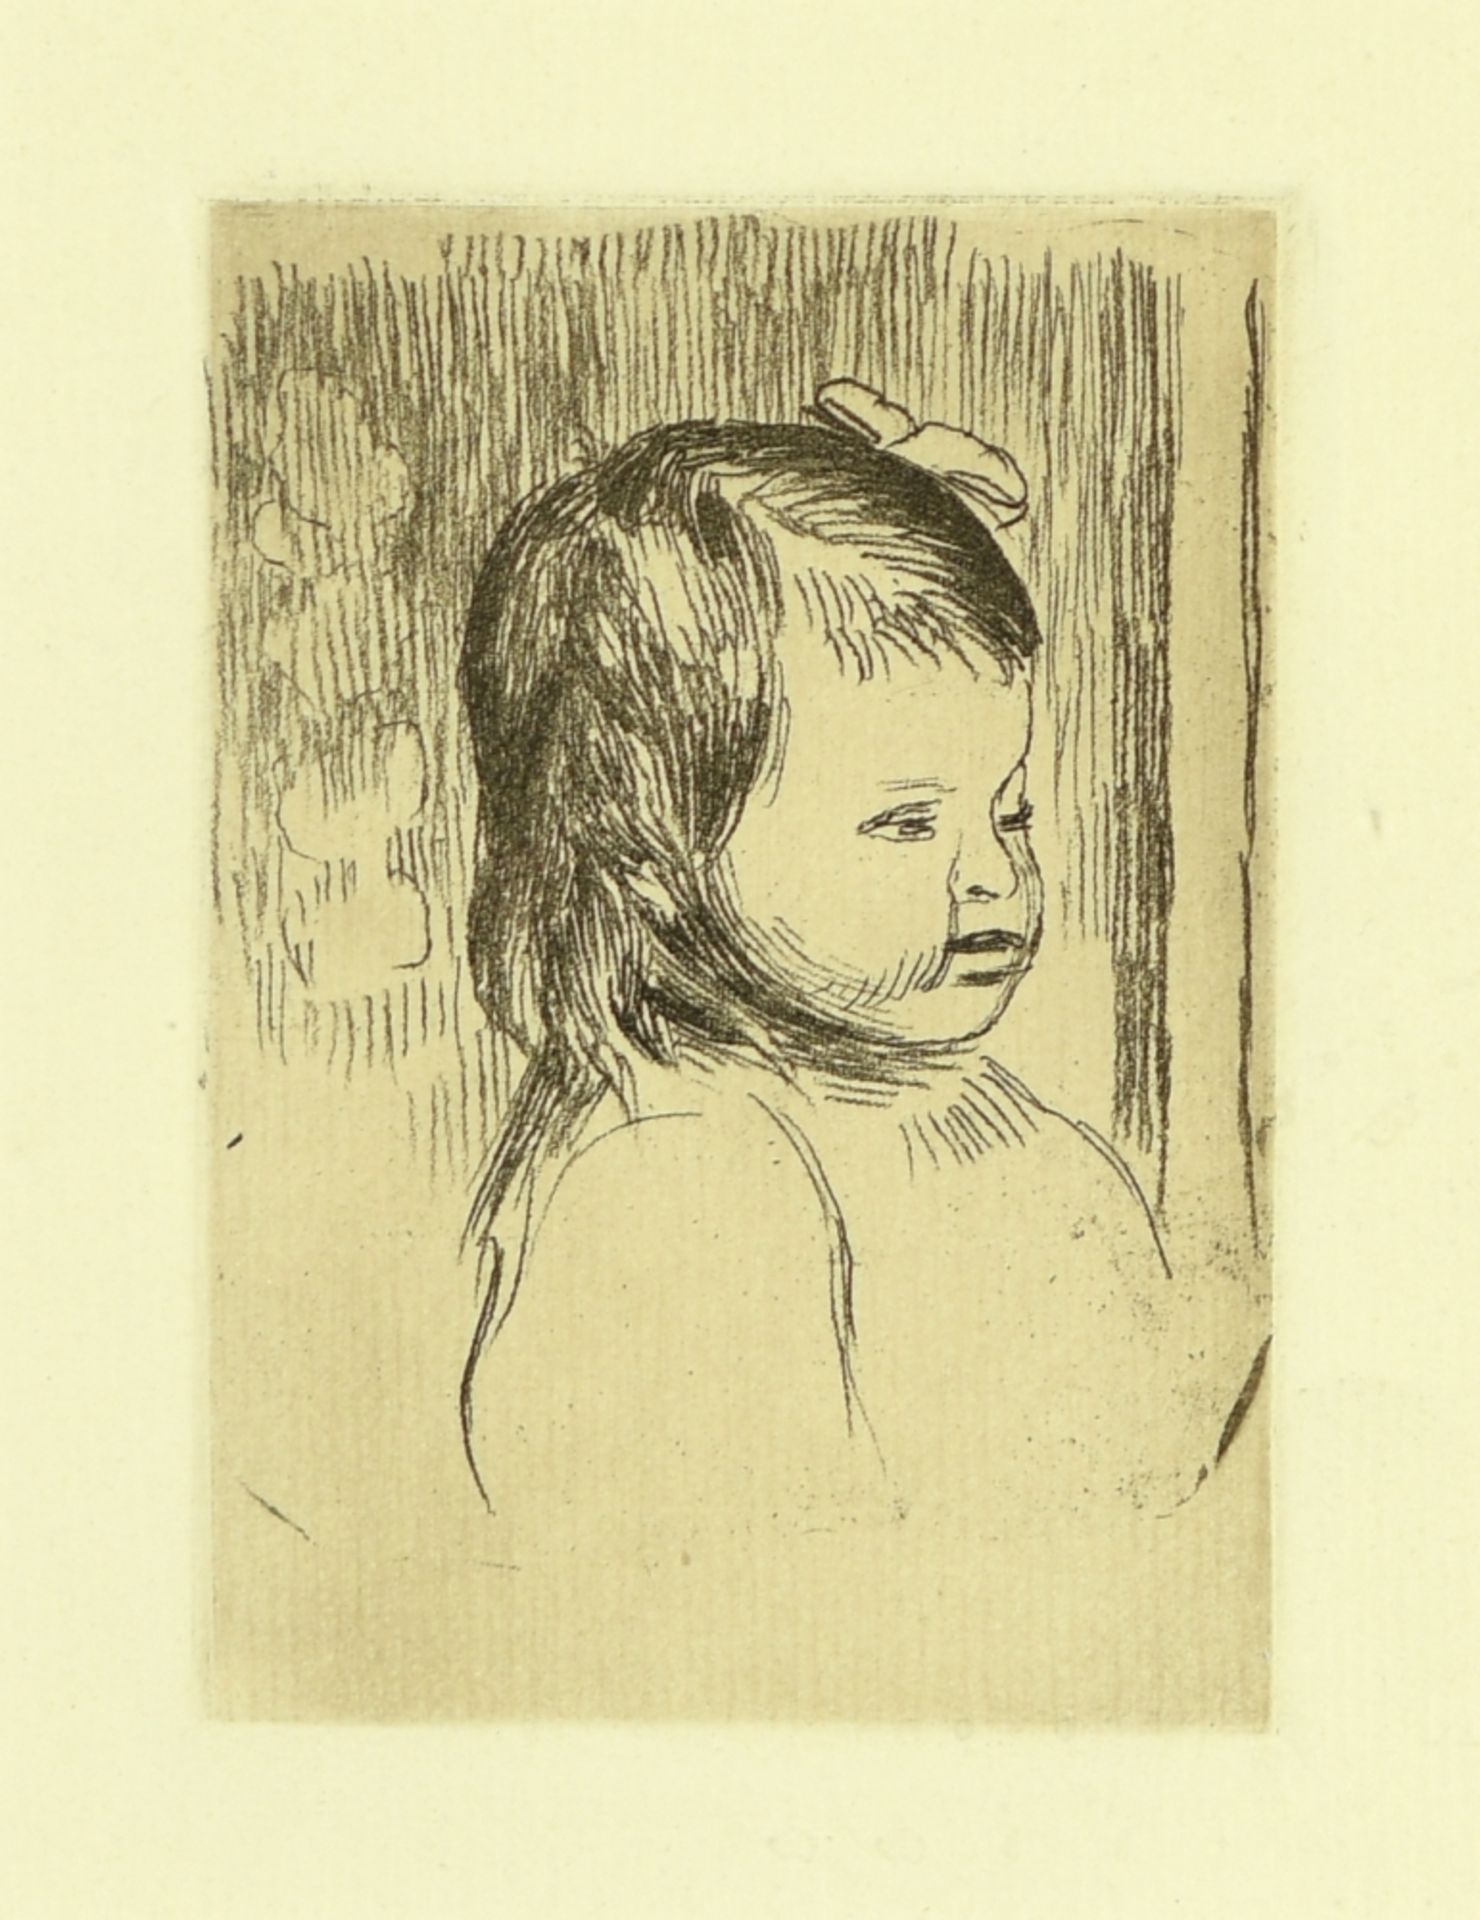 Renoir, Auguste, 1841 Limoges - 1919 Cagnes